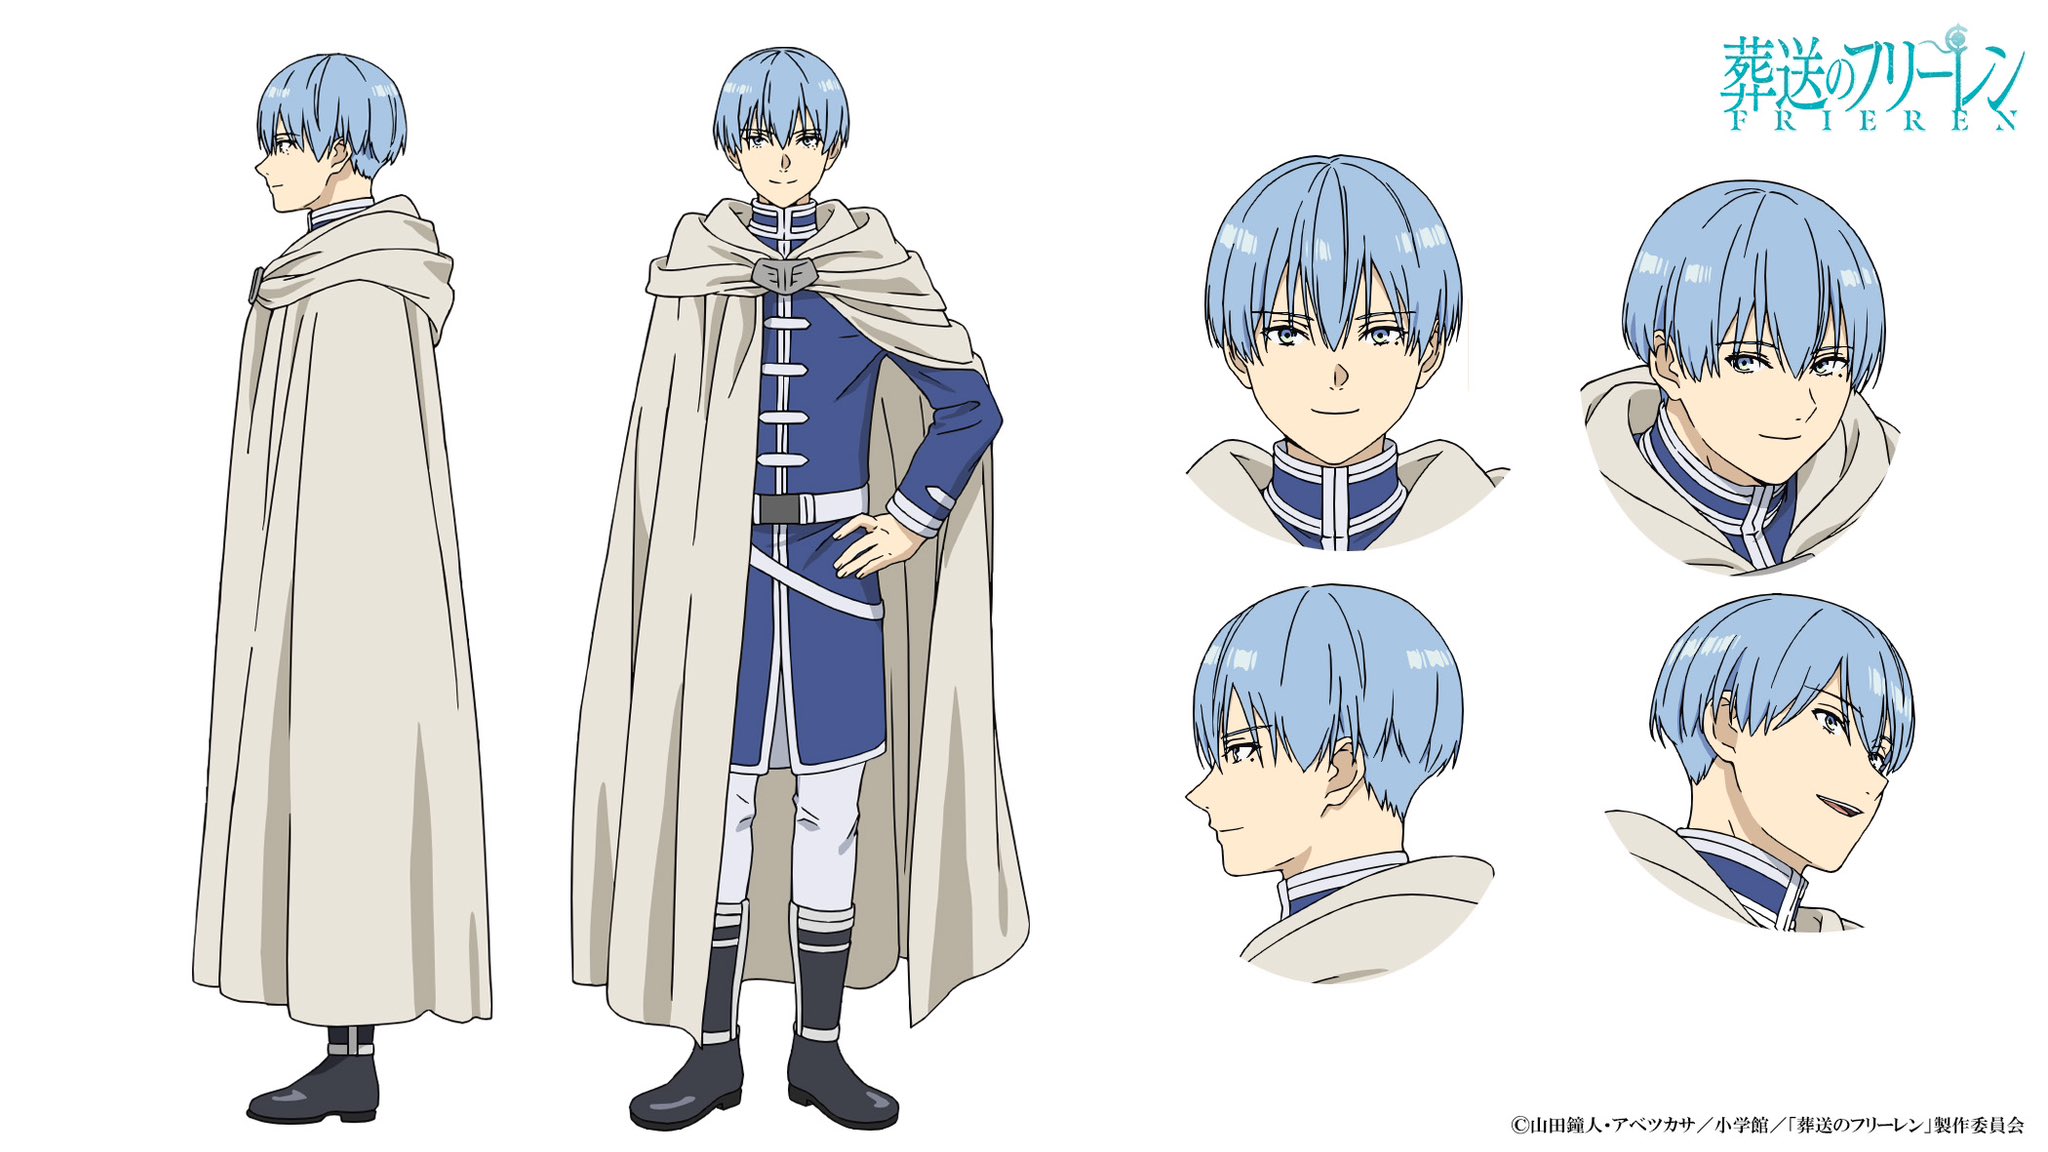 Frieren: Beyond Journey's End Himmel anime character design